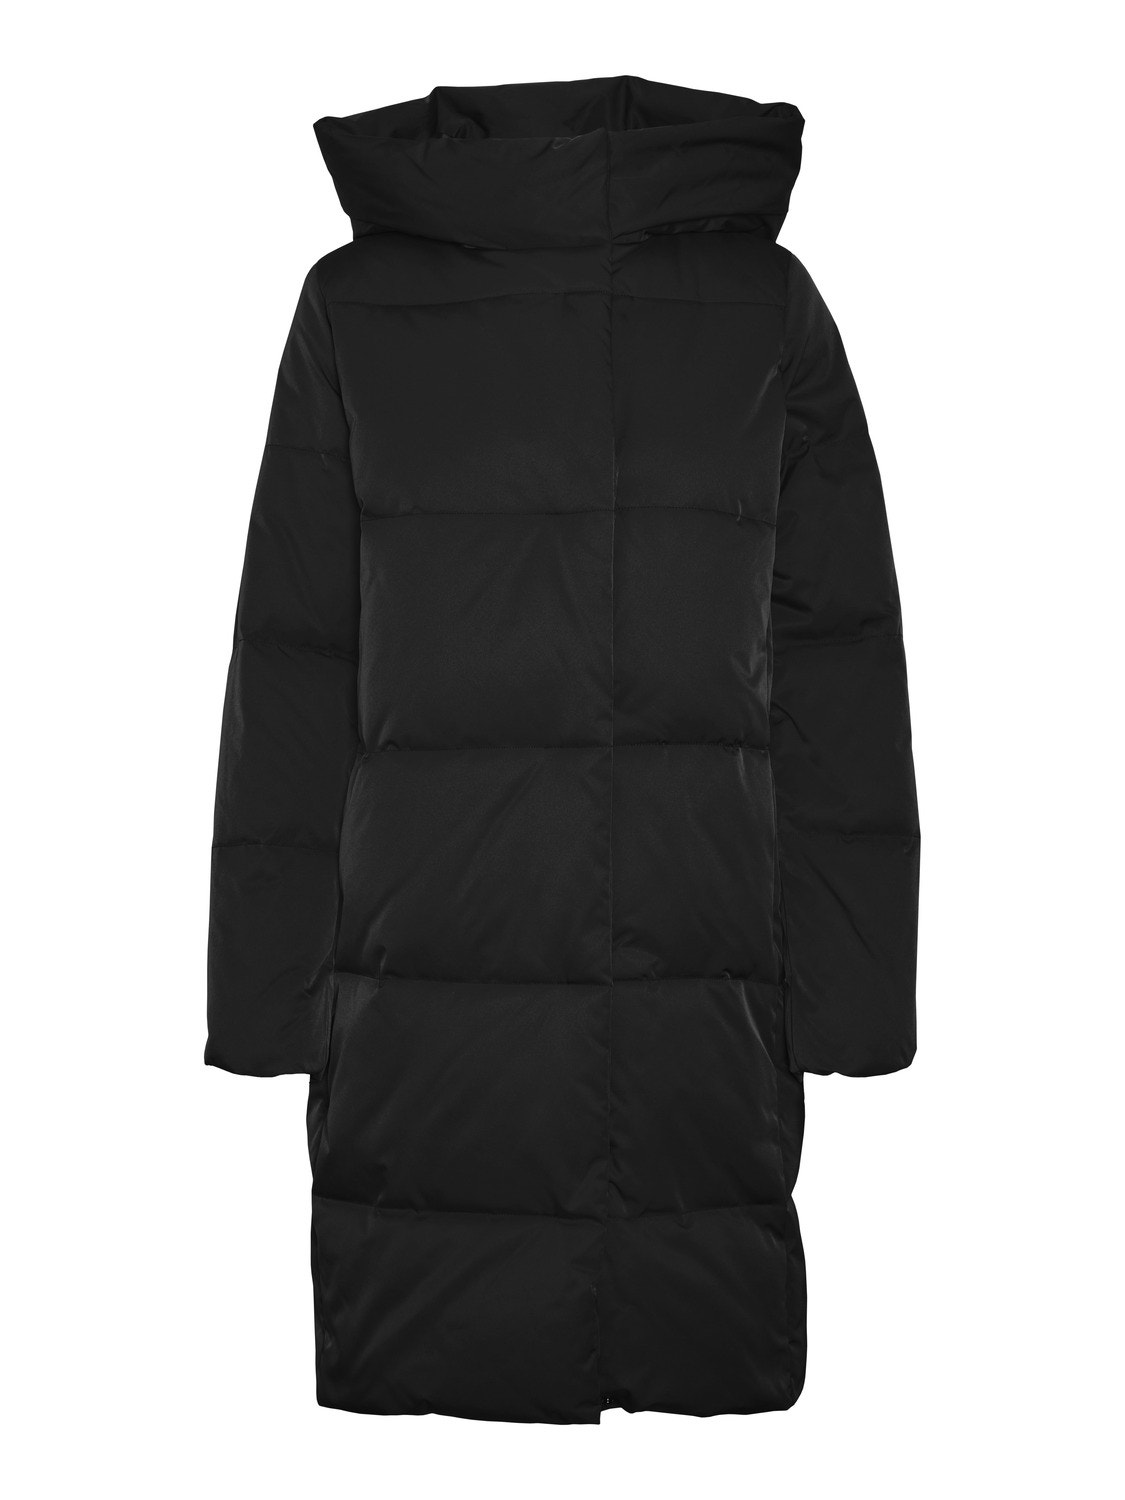 Vero Moda VMSTELLA Coat -Black - 10300030